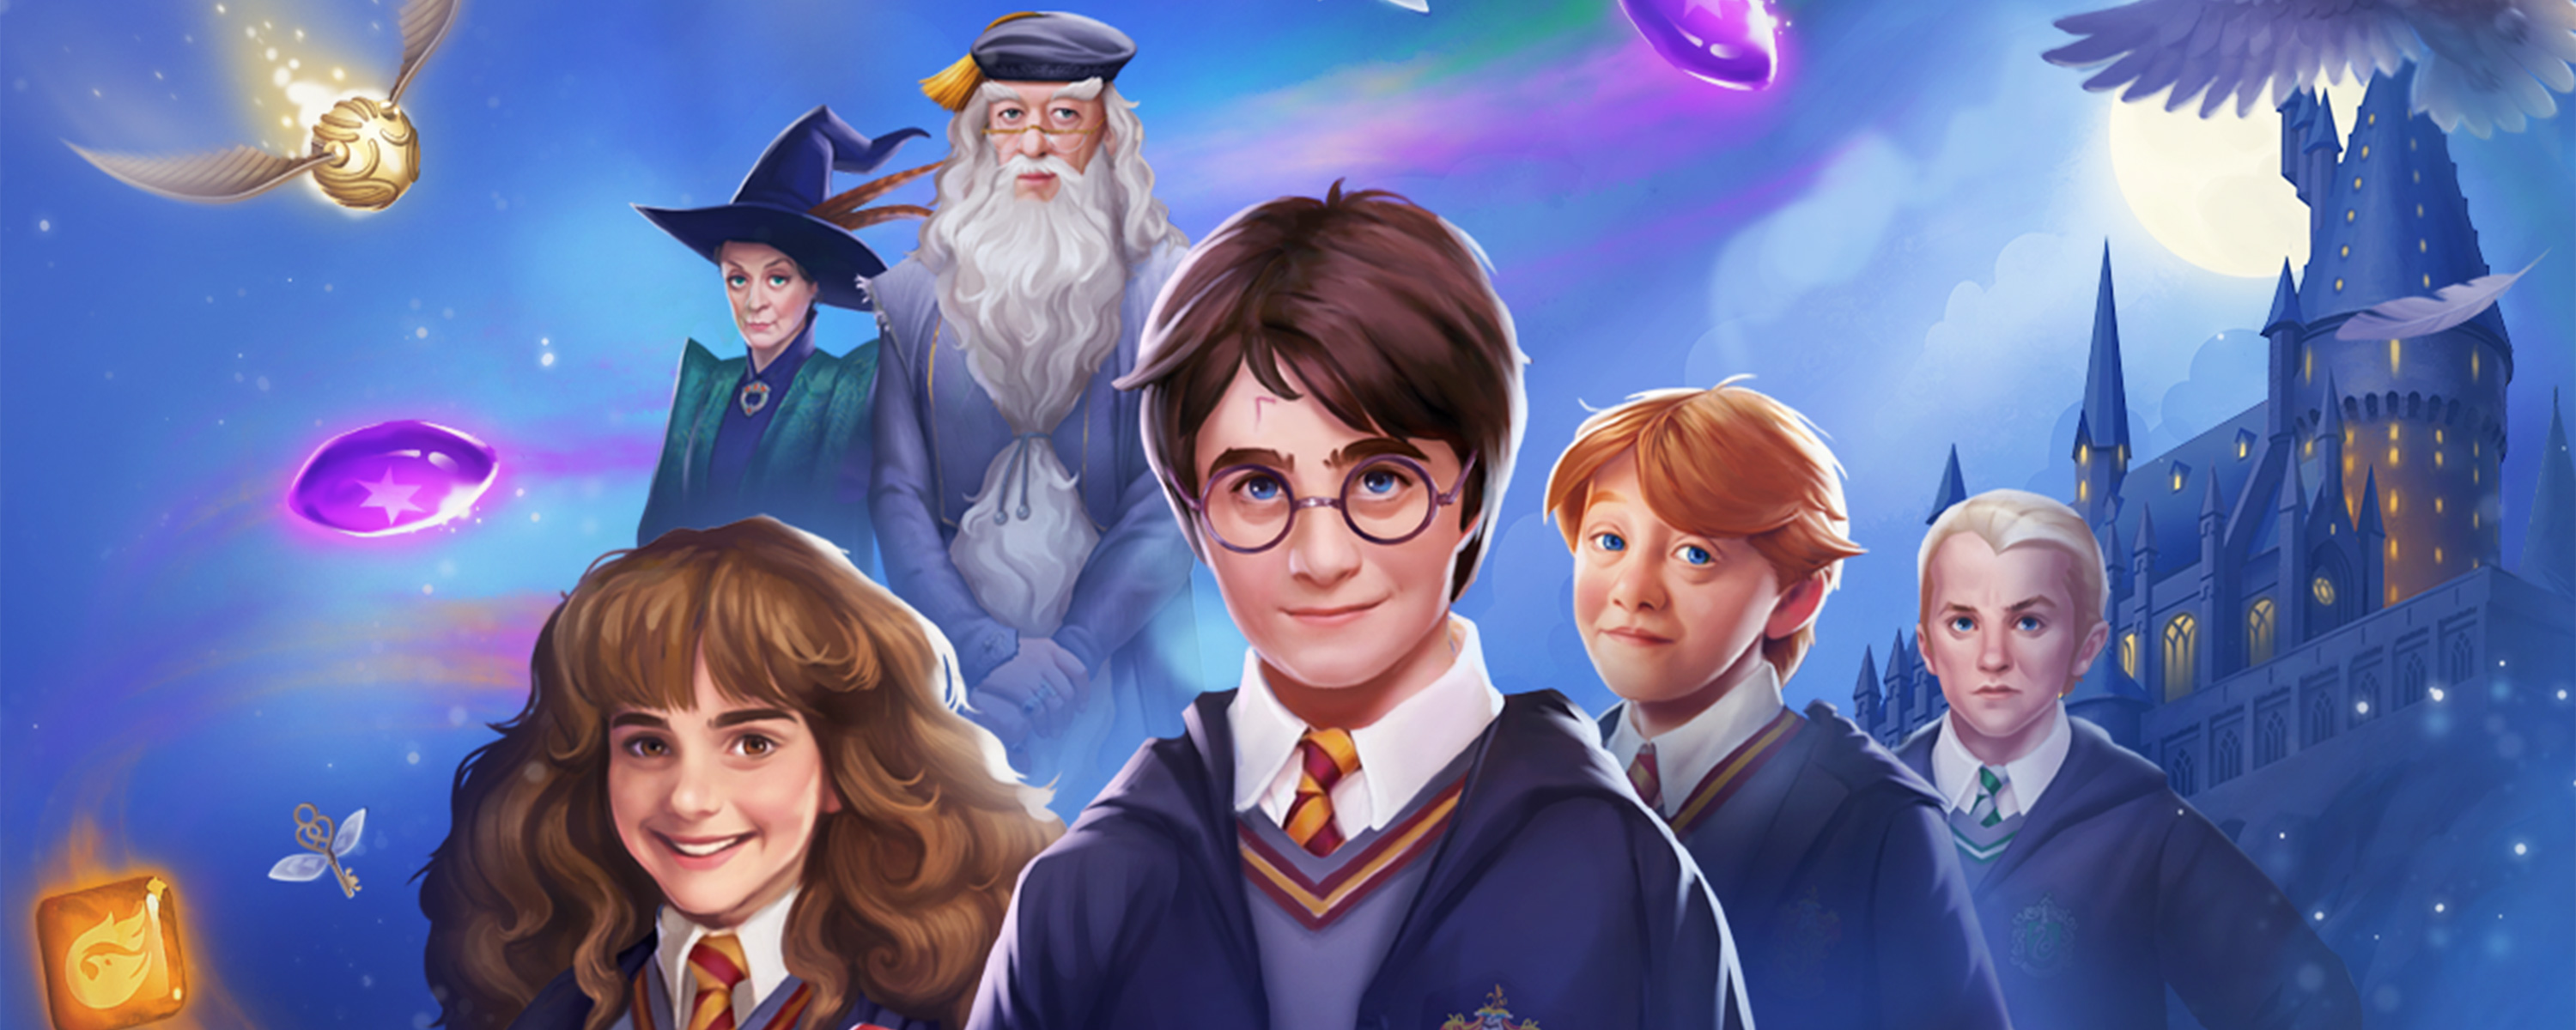 Harry Potter Mobile Games Magic Up $1 Billion in Global Player Spending